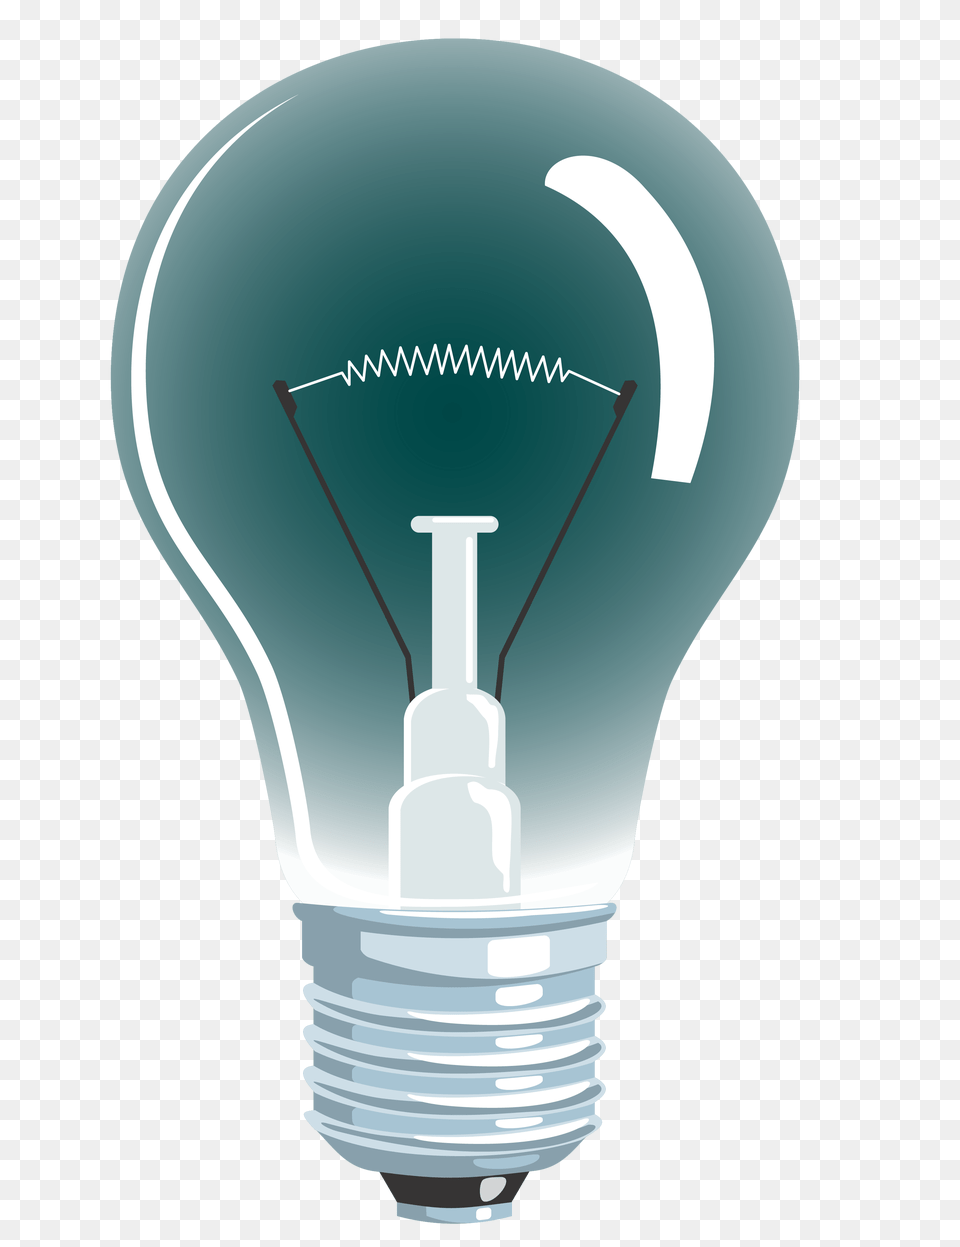 Lamp, Light, Lightbulb, Smoke Pipe Png Image